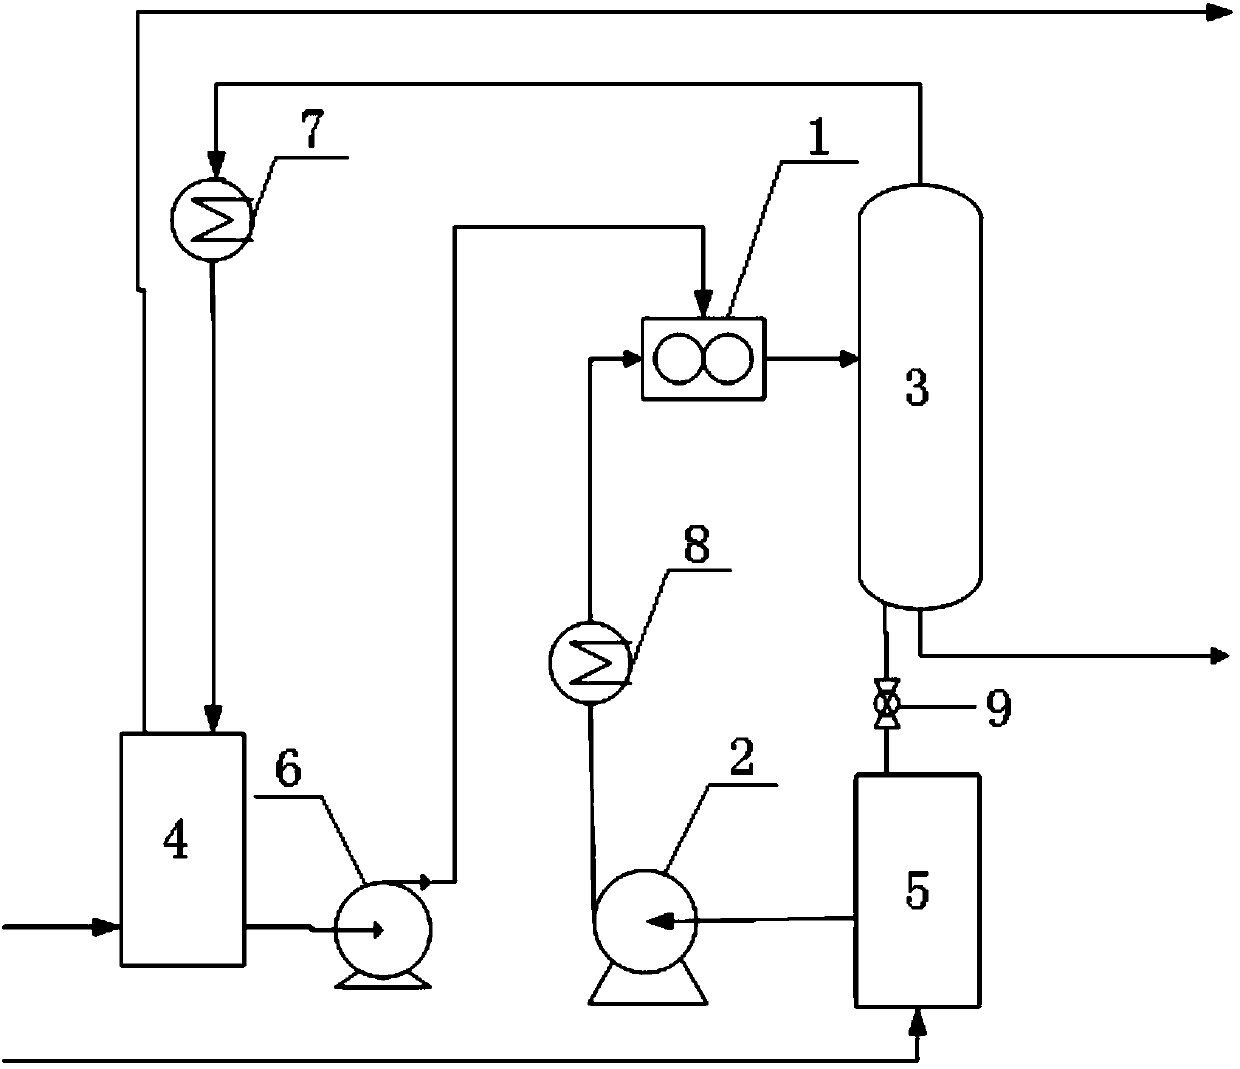 Method and system for modifying heavy oil through hydrodynamic cavitation